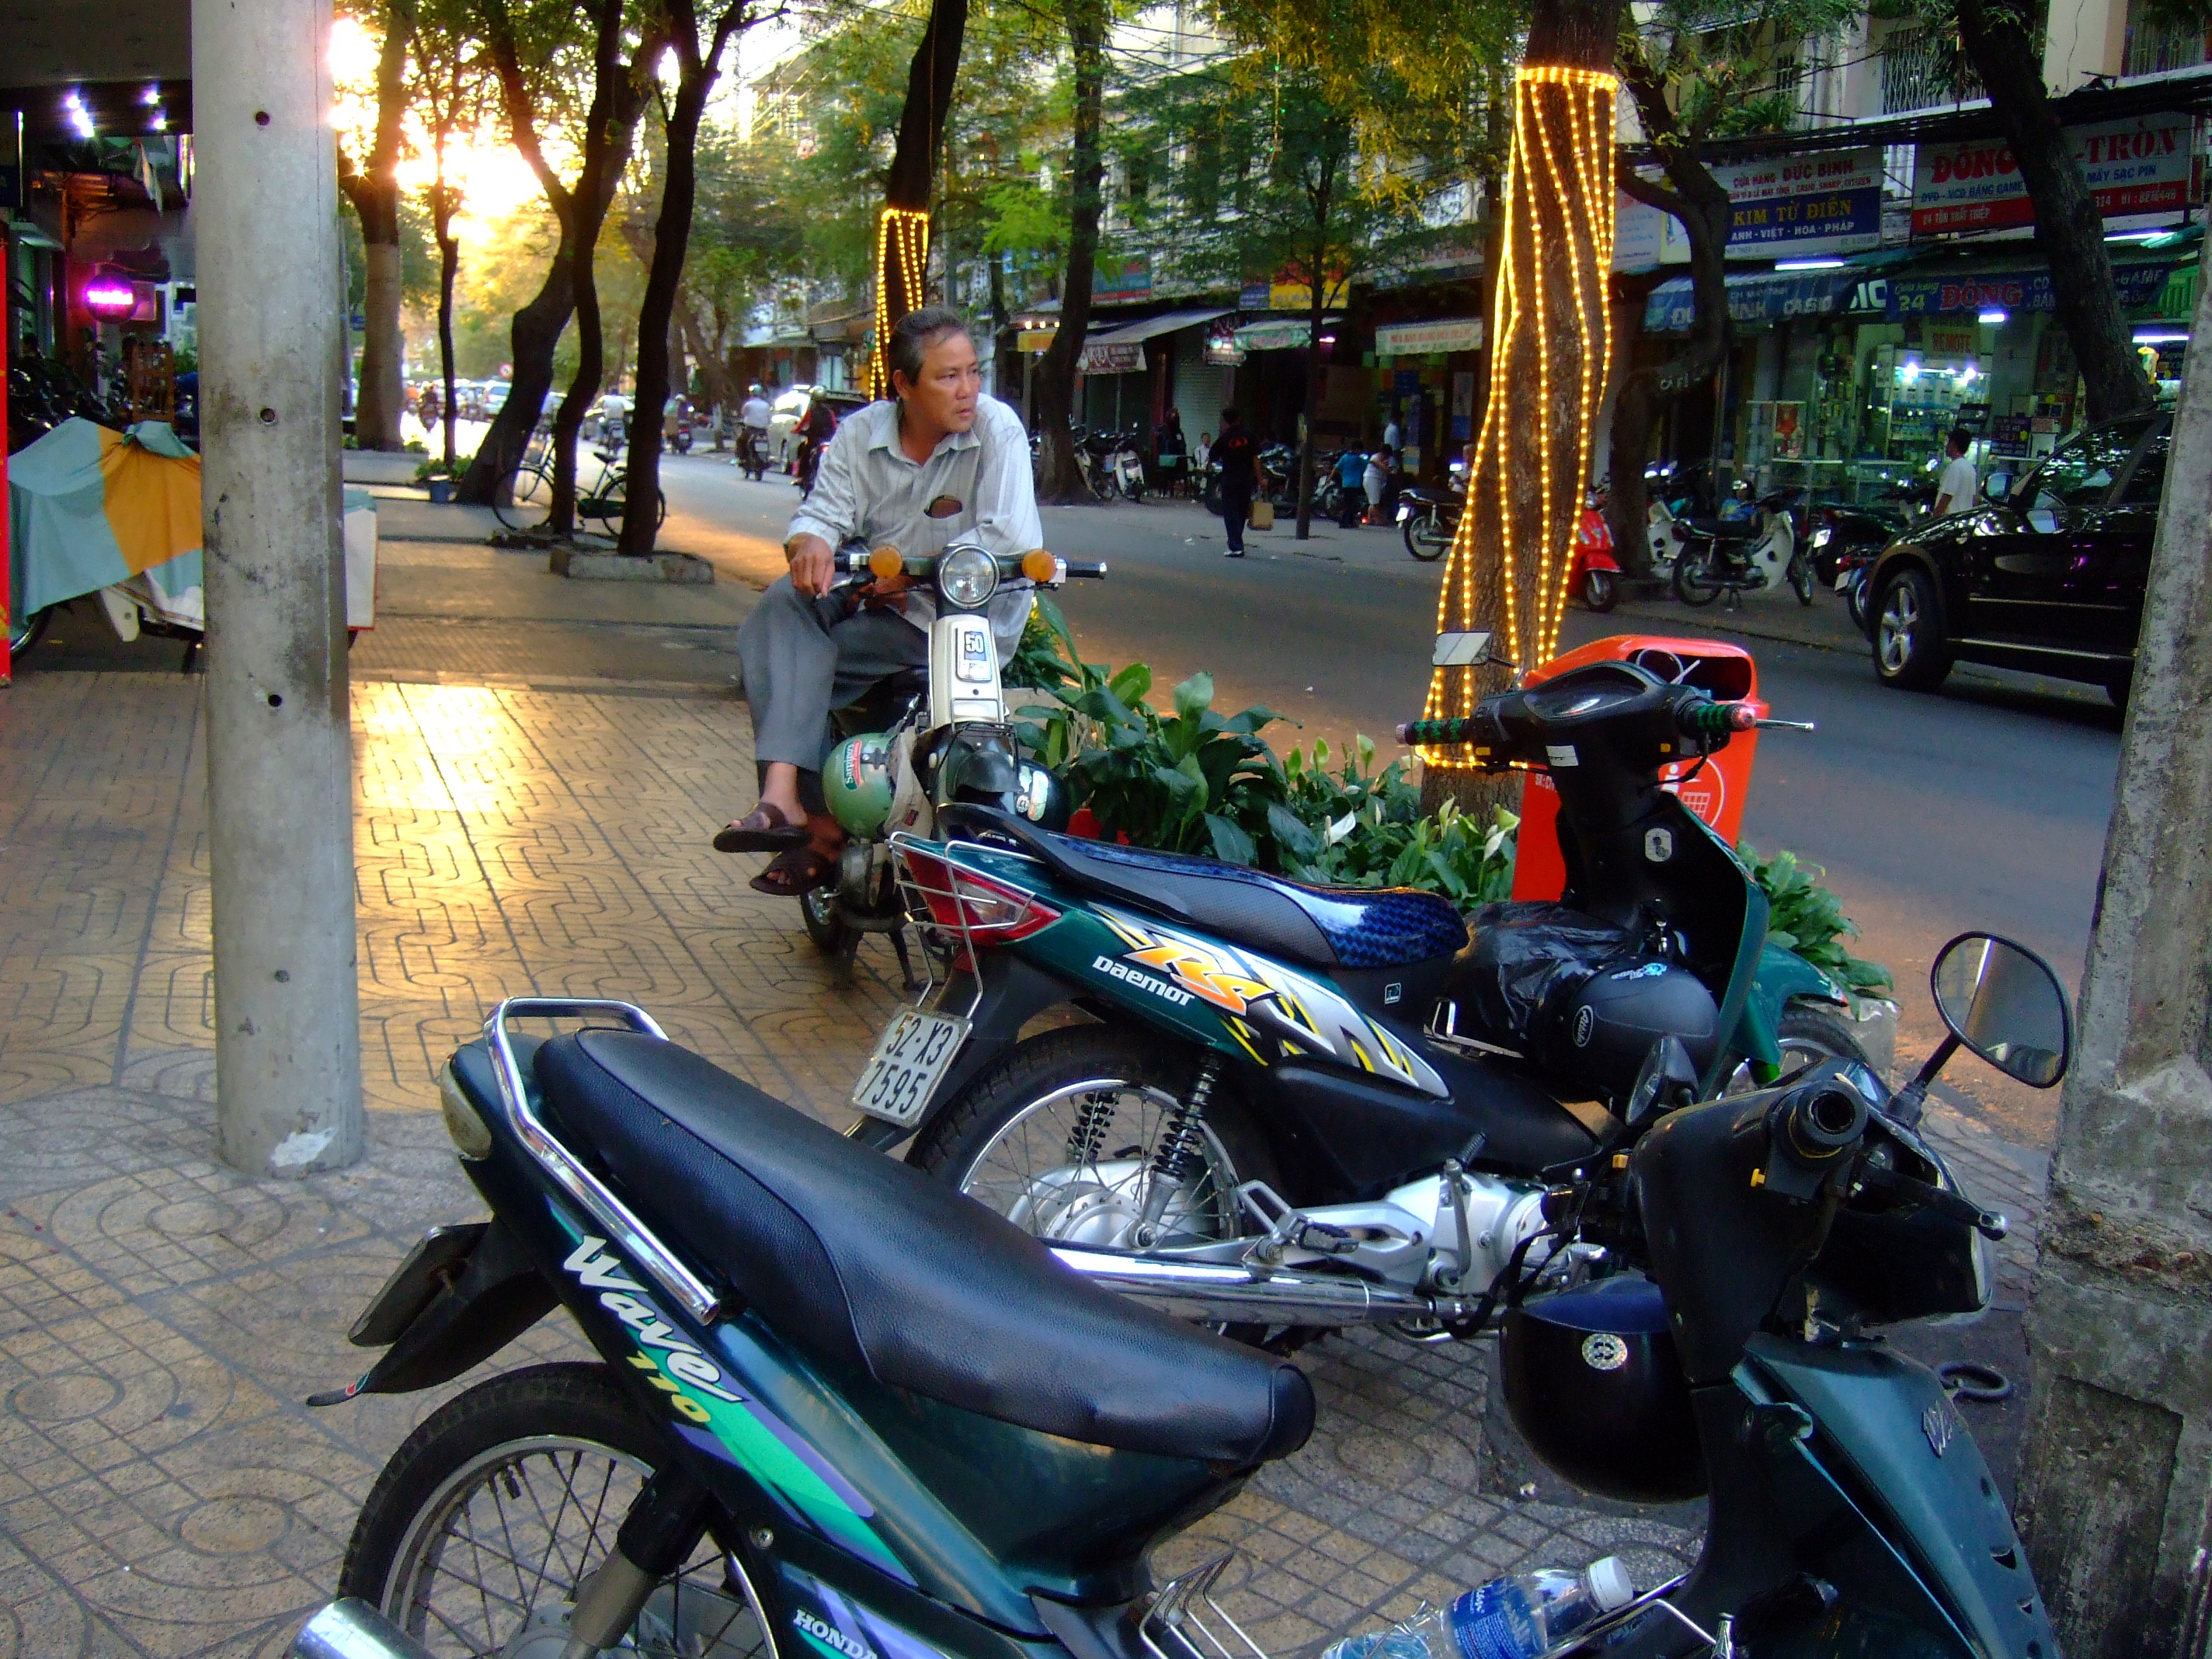 Vietnam Ho Chi Minh City motorbike street scenes Feb 2009 032